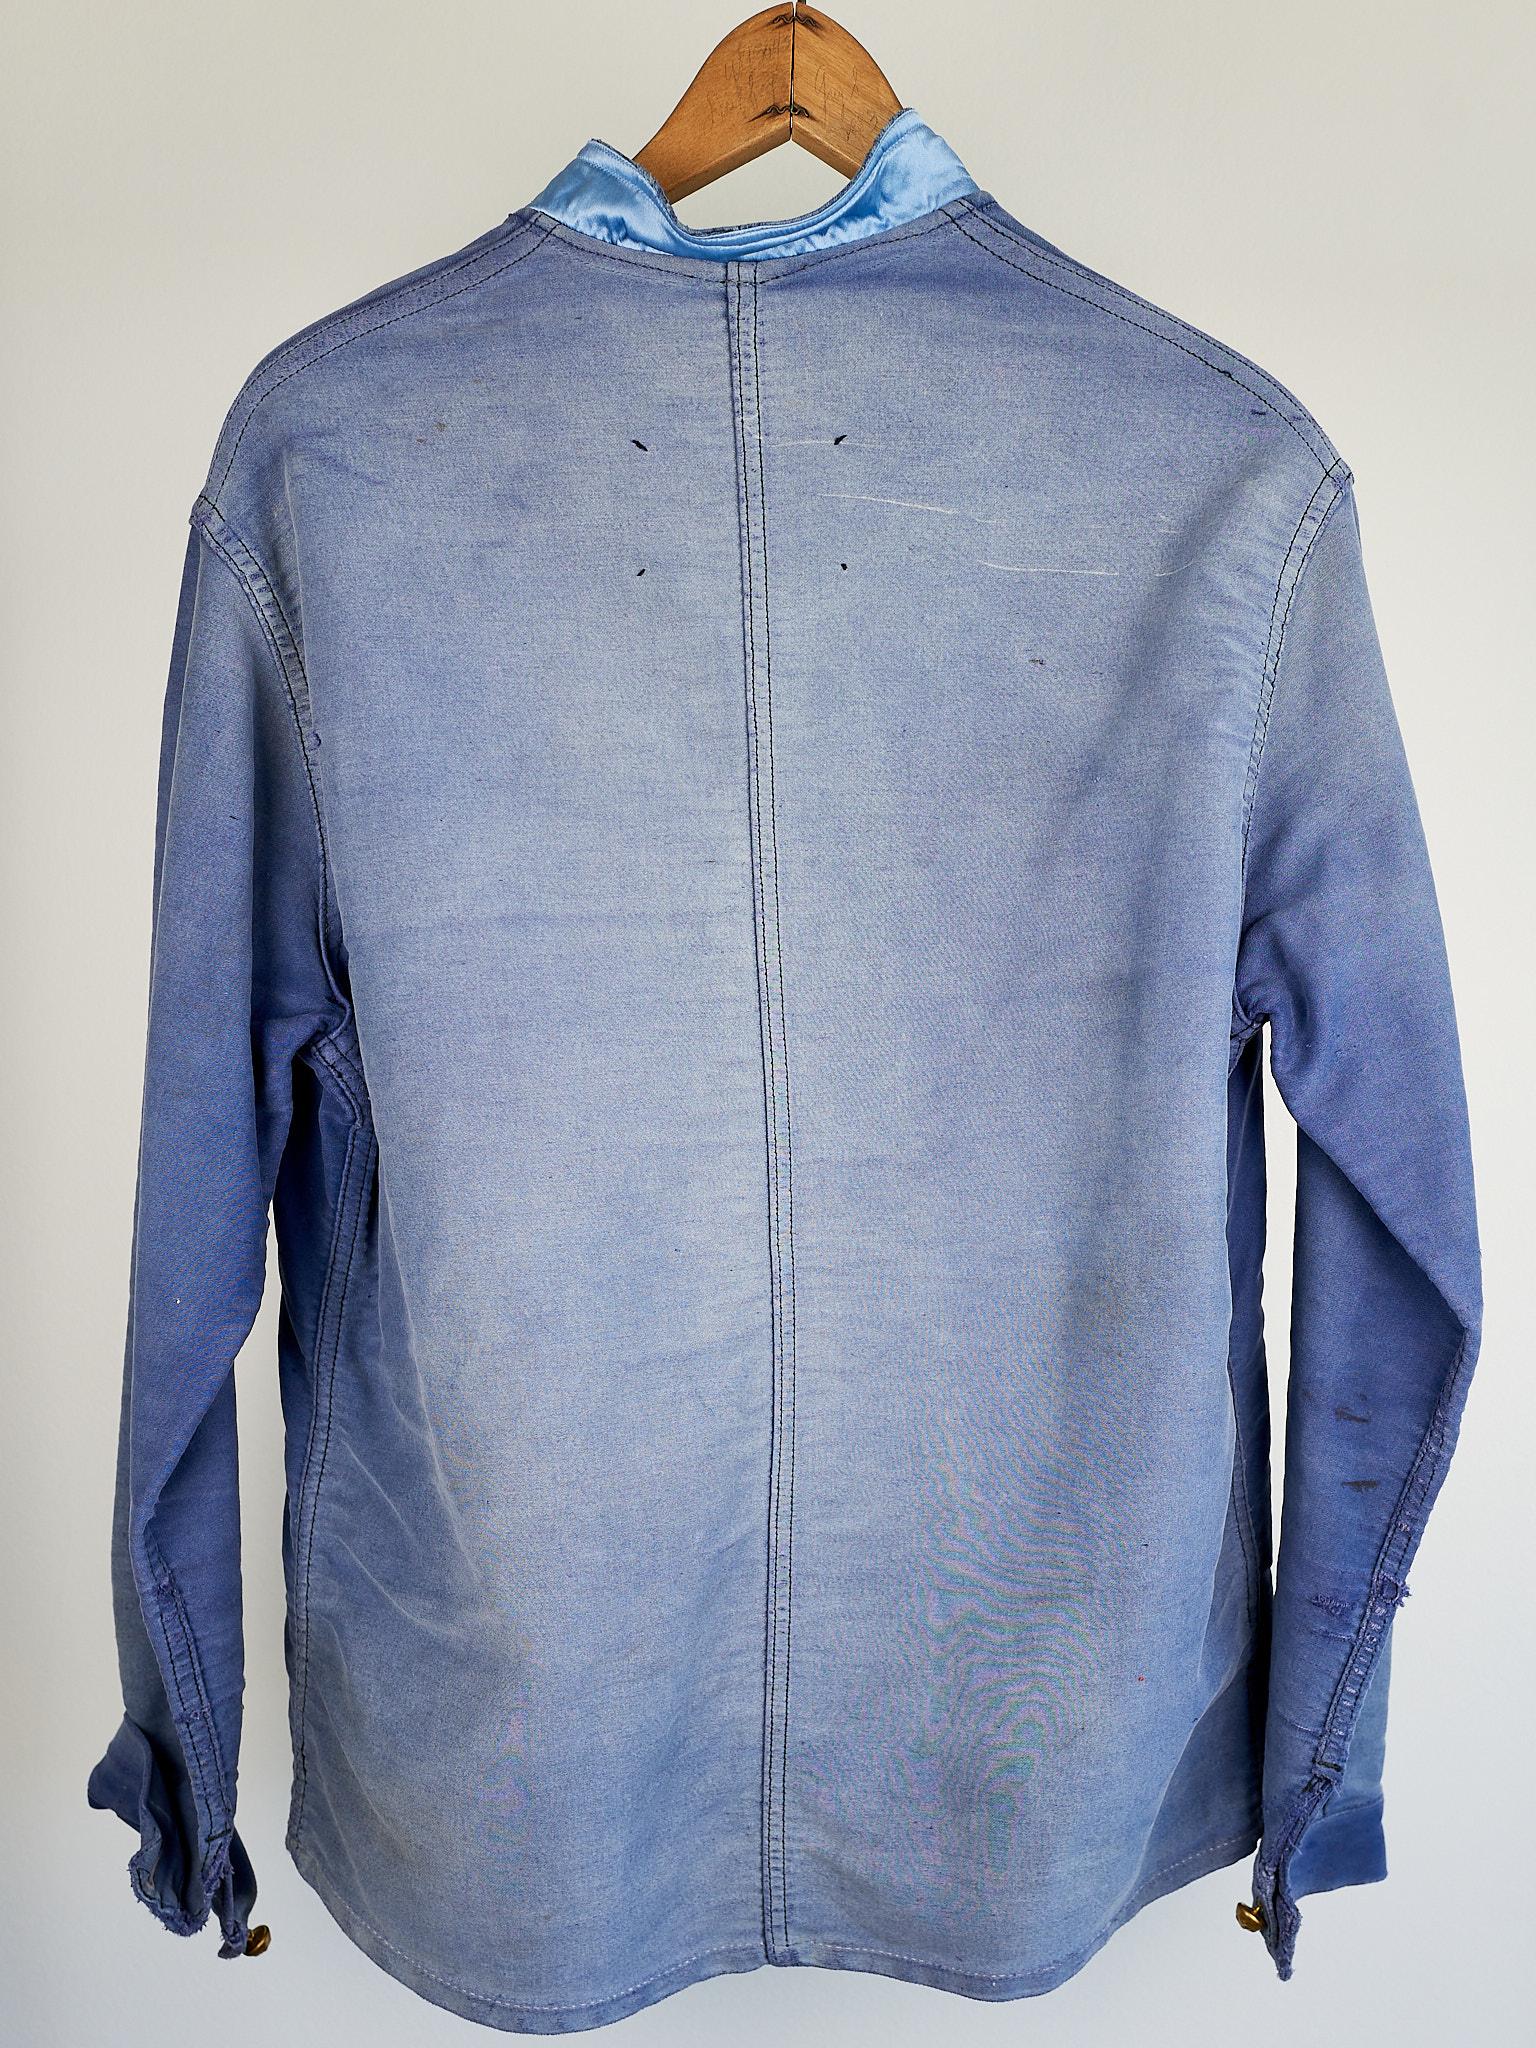 Distressed Light Blue Moleskin Jacket French Work Wear Black Silver Lurex Tweed  3